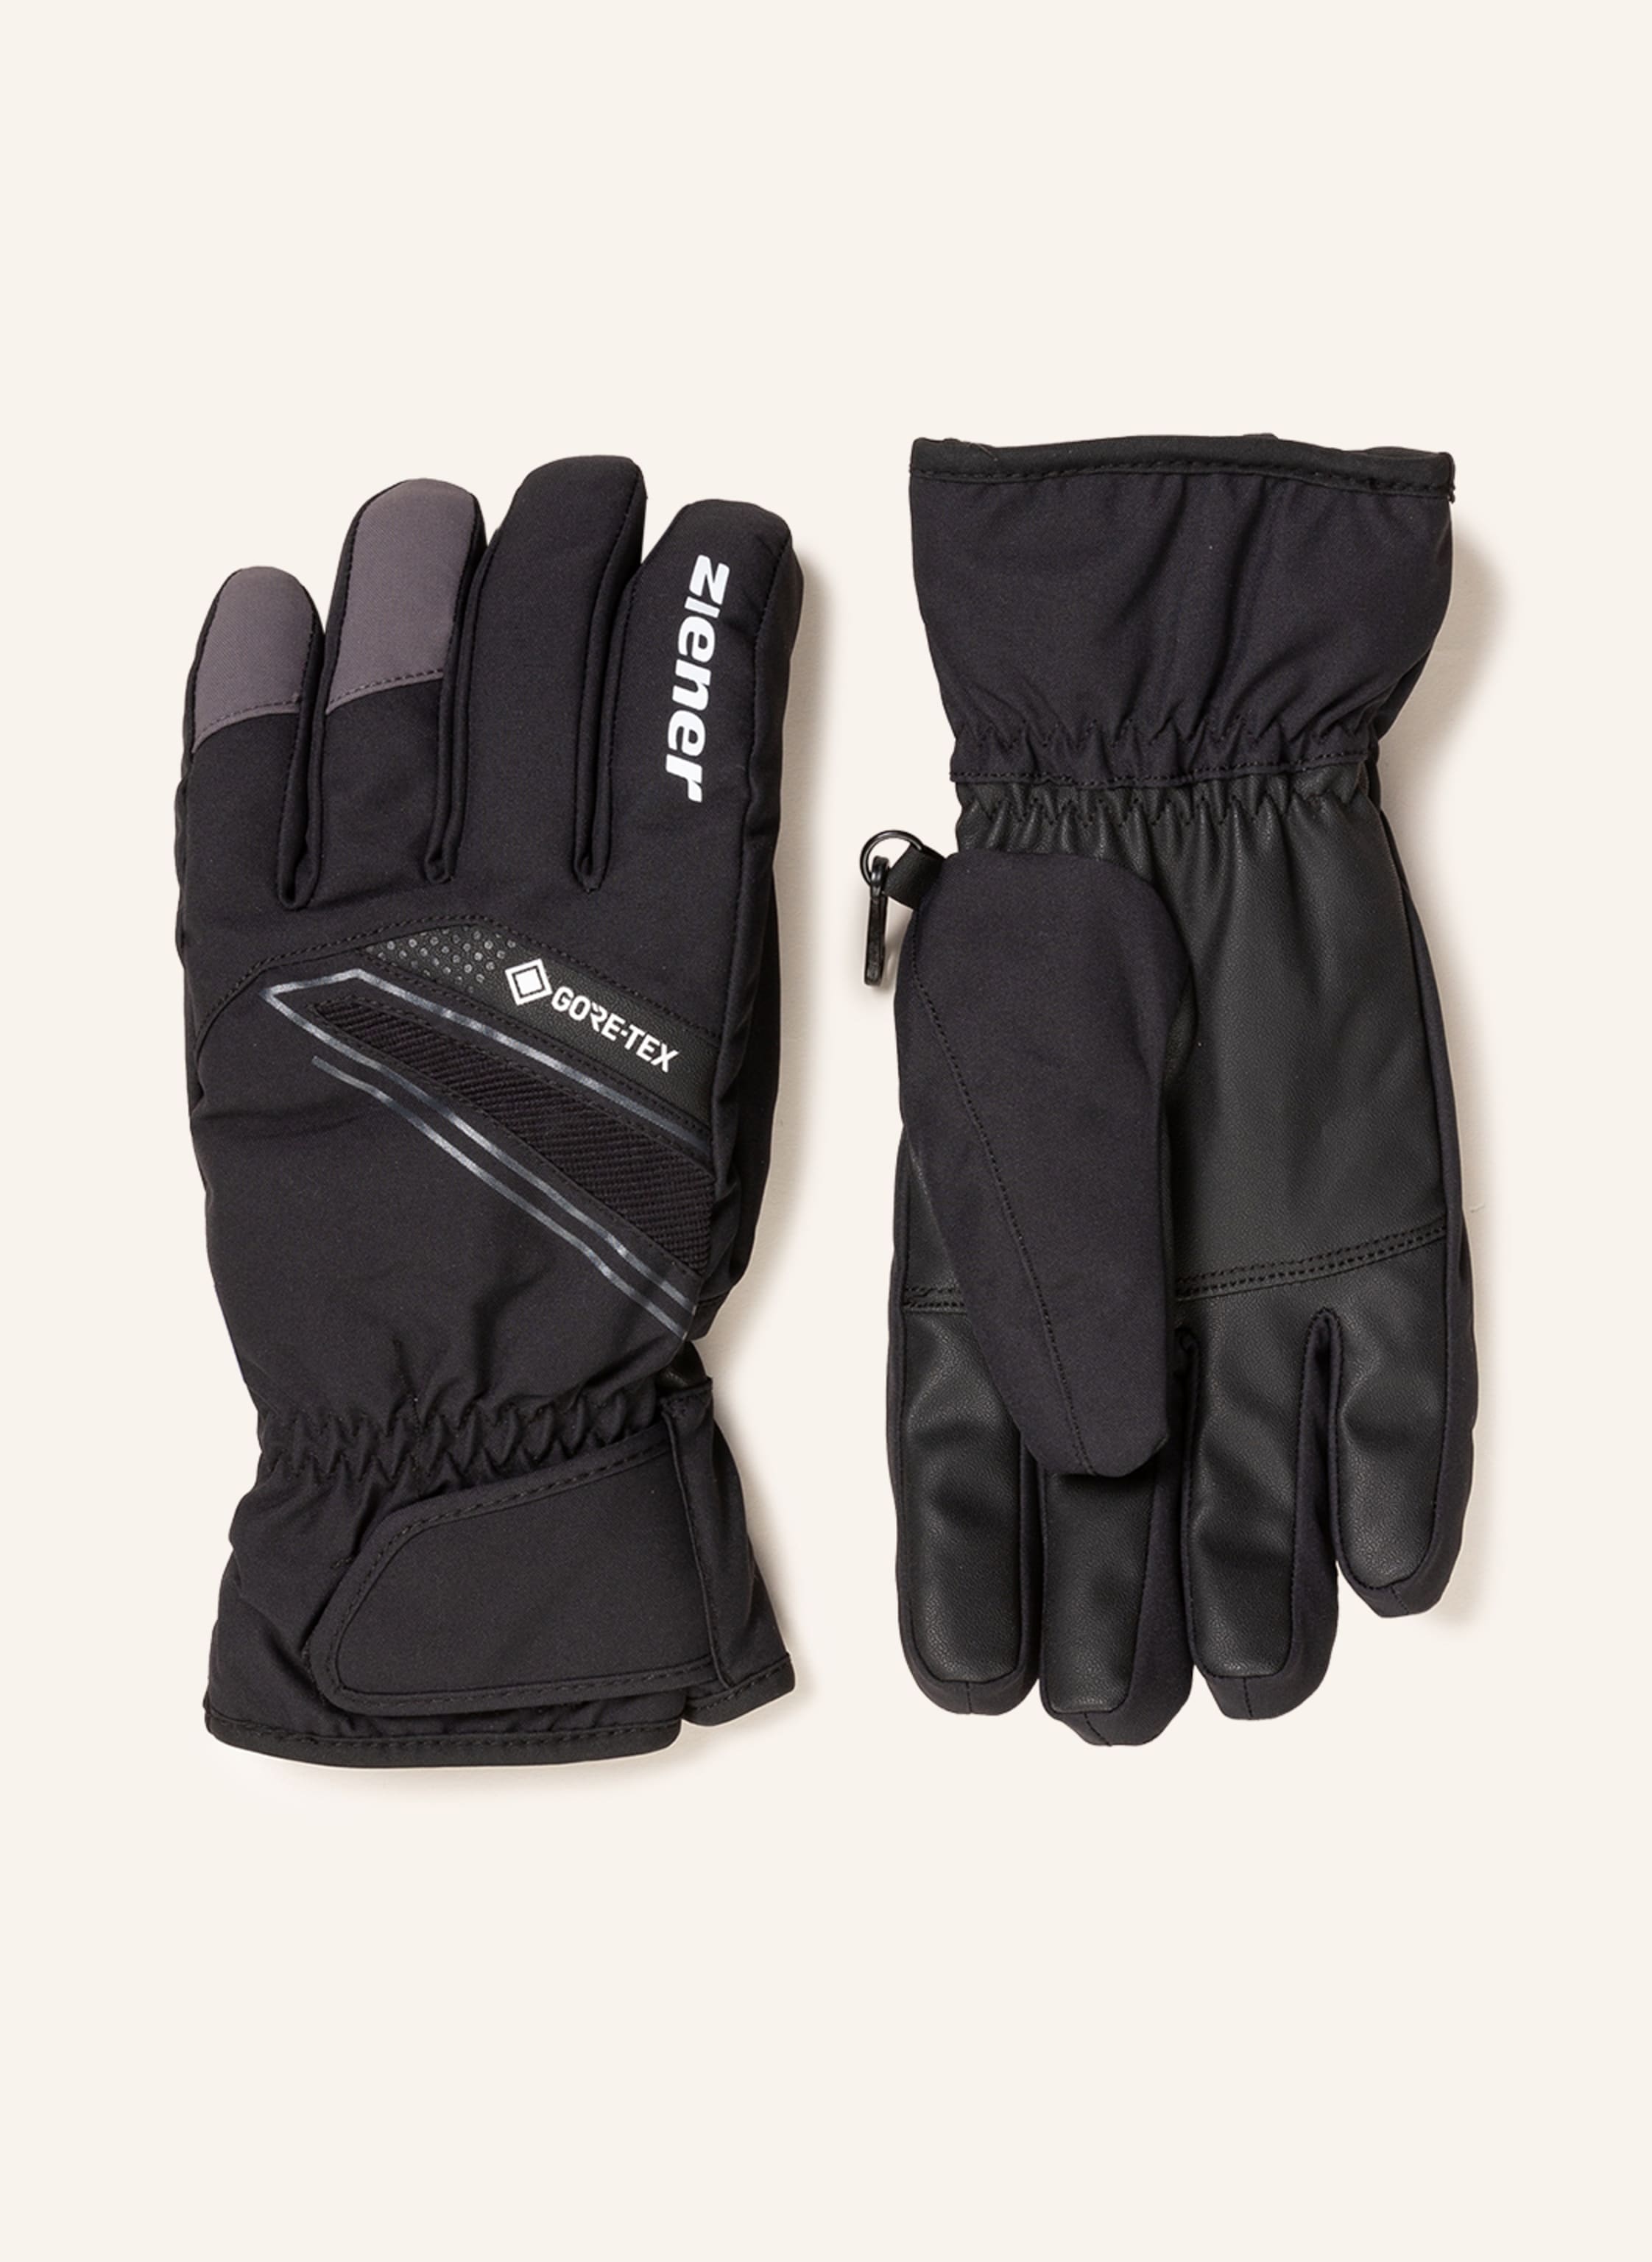 ziener Skiing GUNAR gloves GTX black in